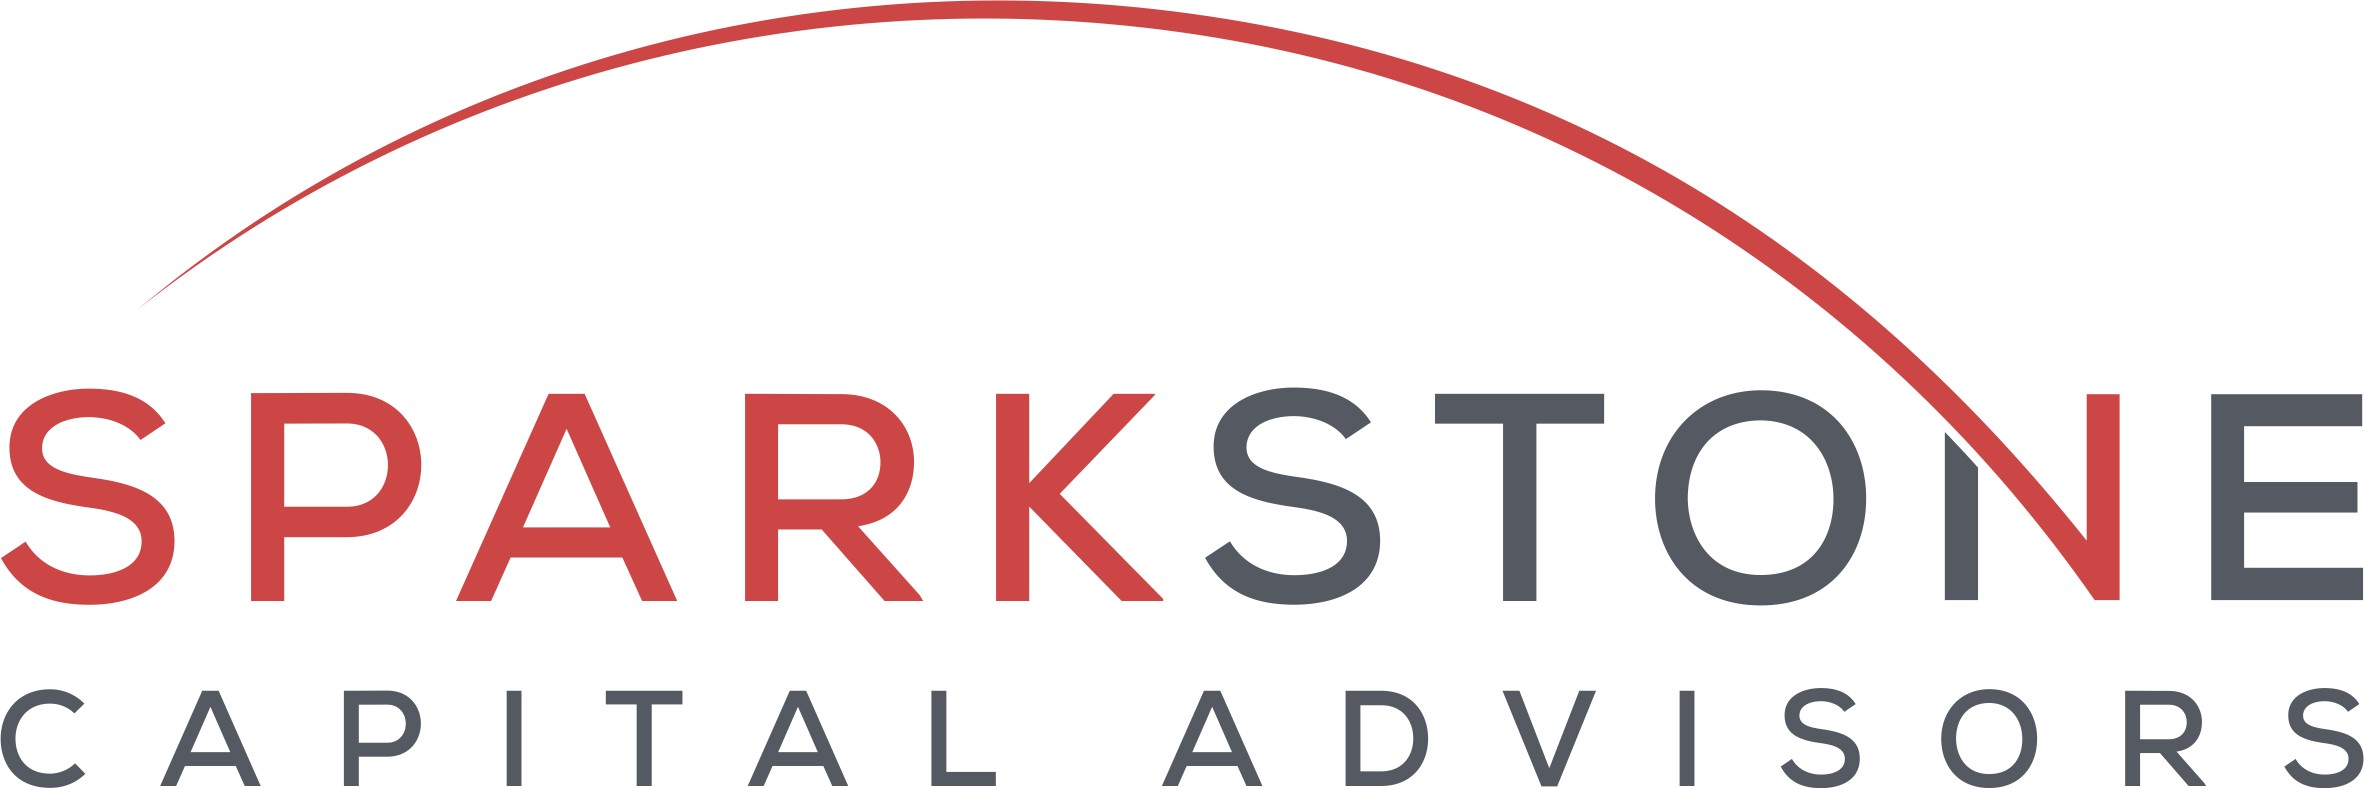 Sparkstone Capital Advisors